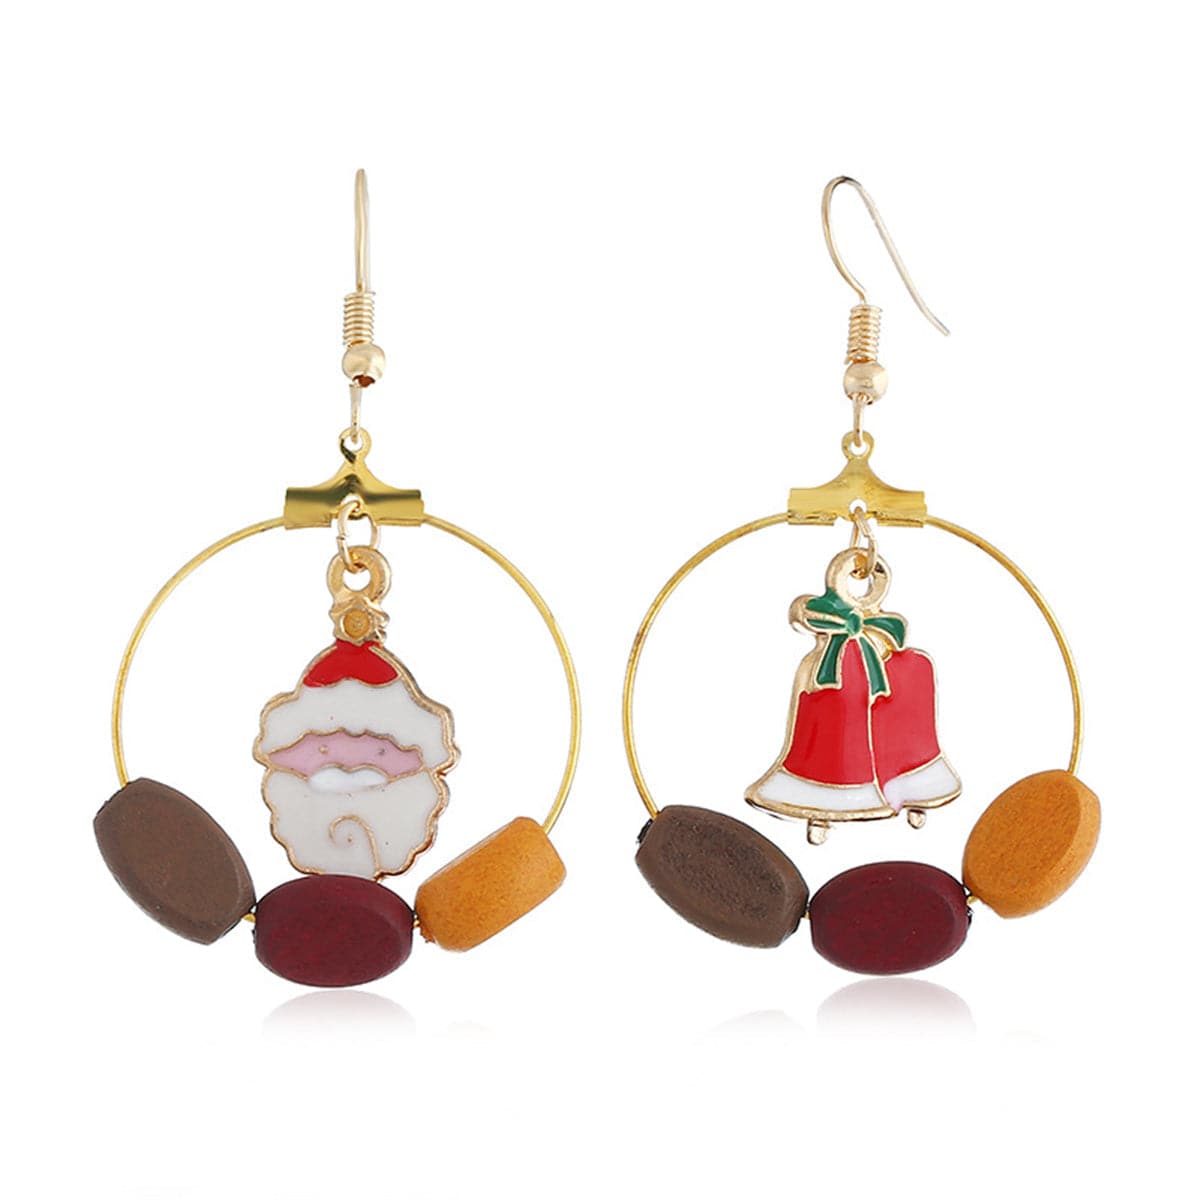 Wood & 18K Gold-Plated Santa Claus & Bell Drop Earrings